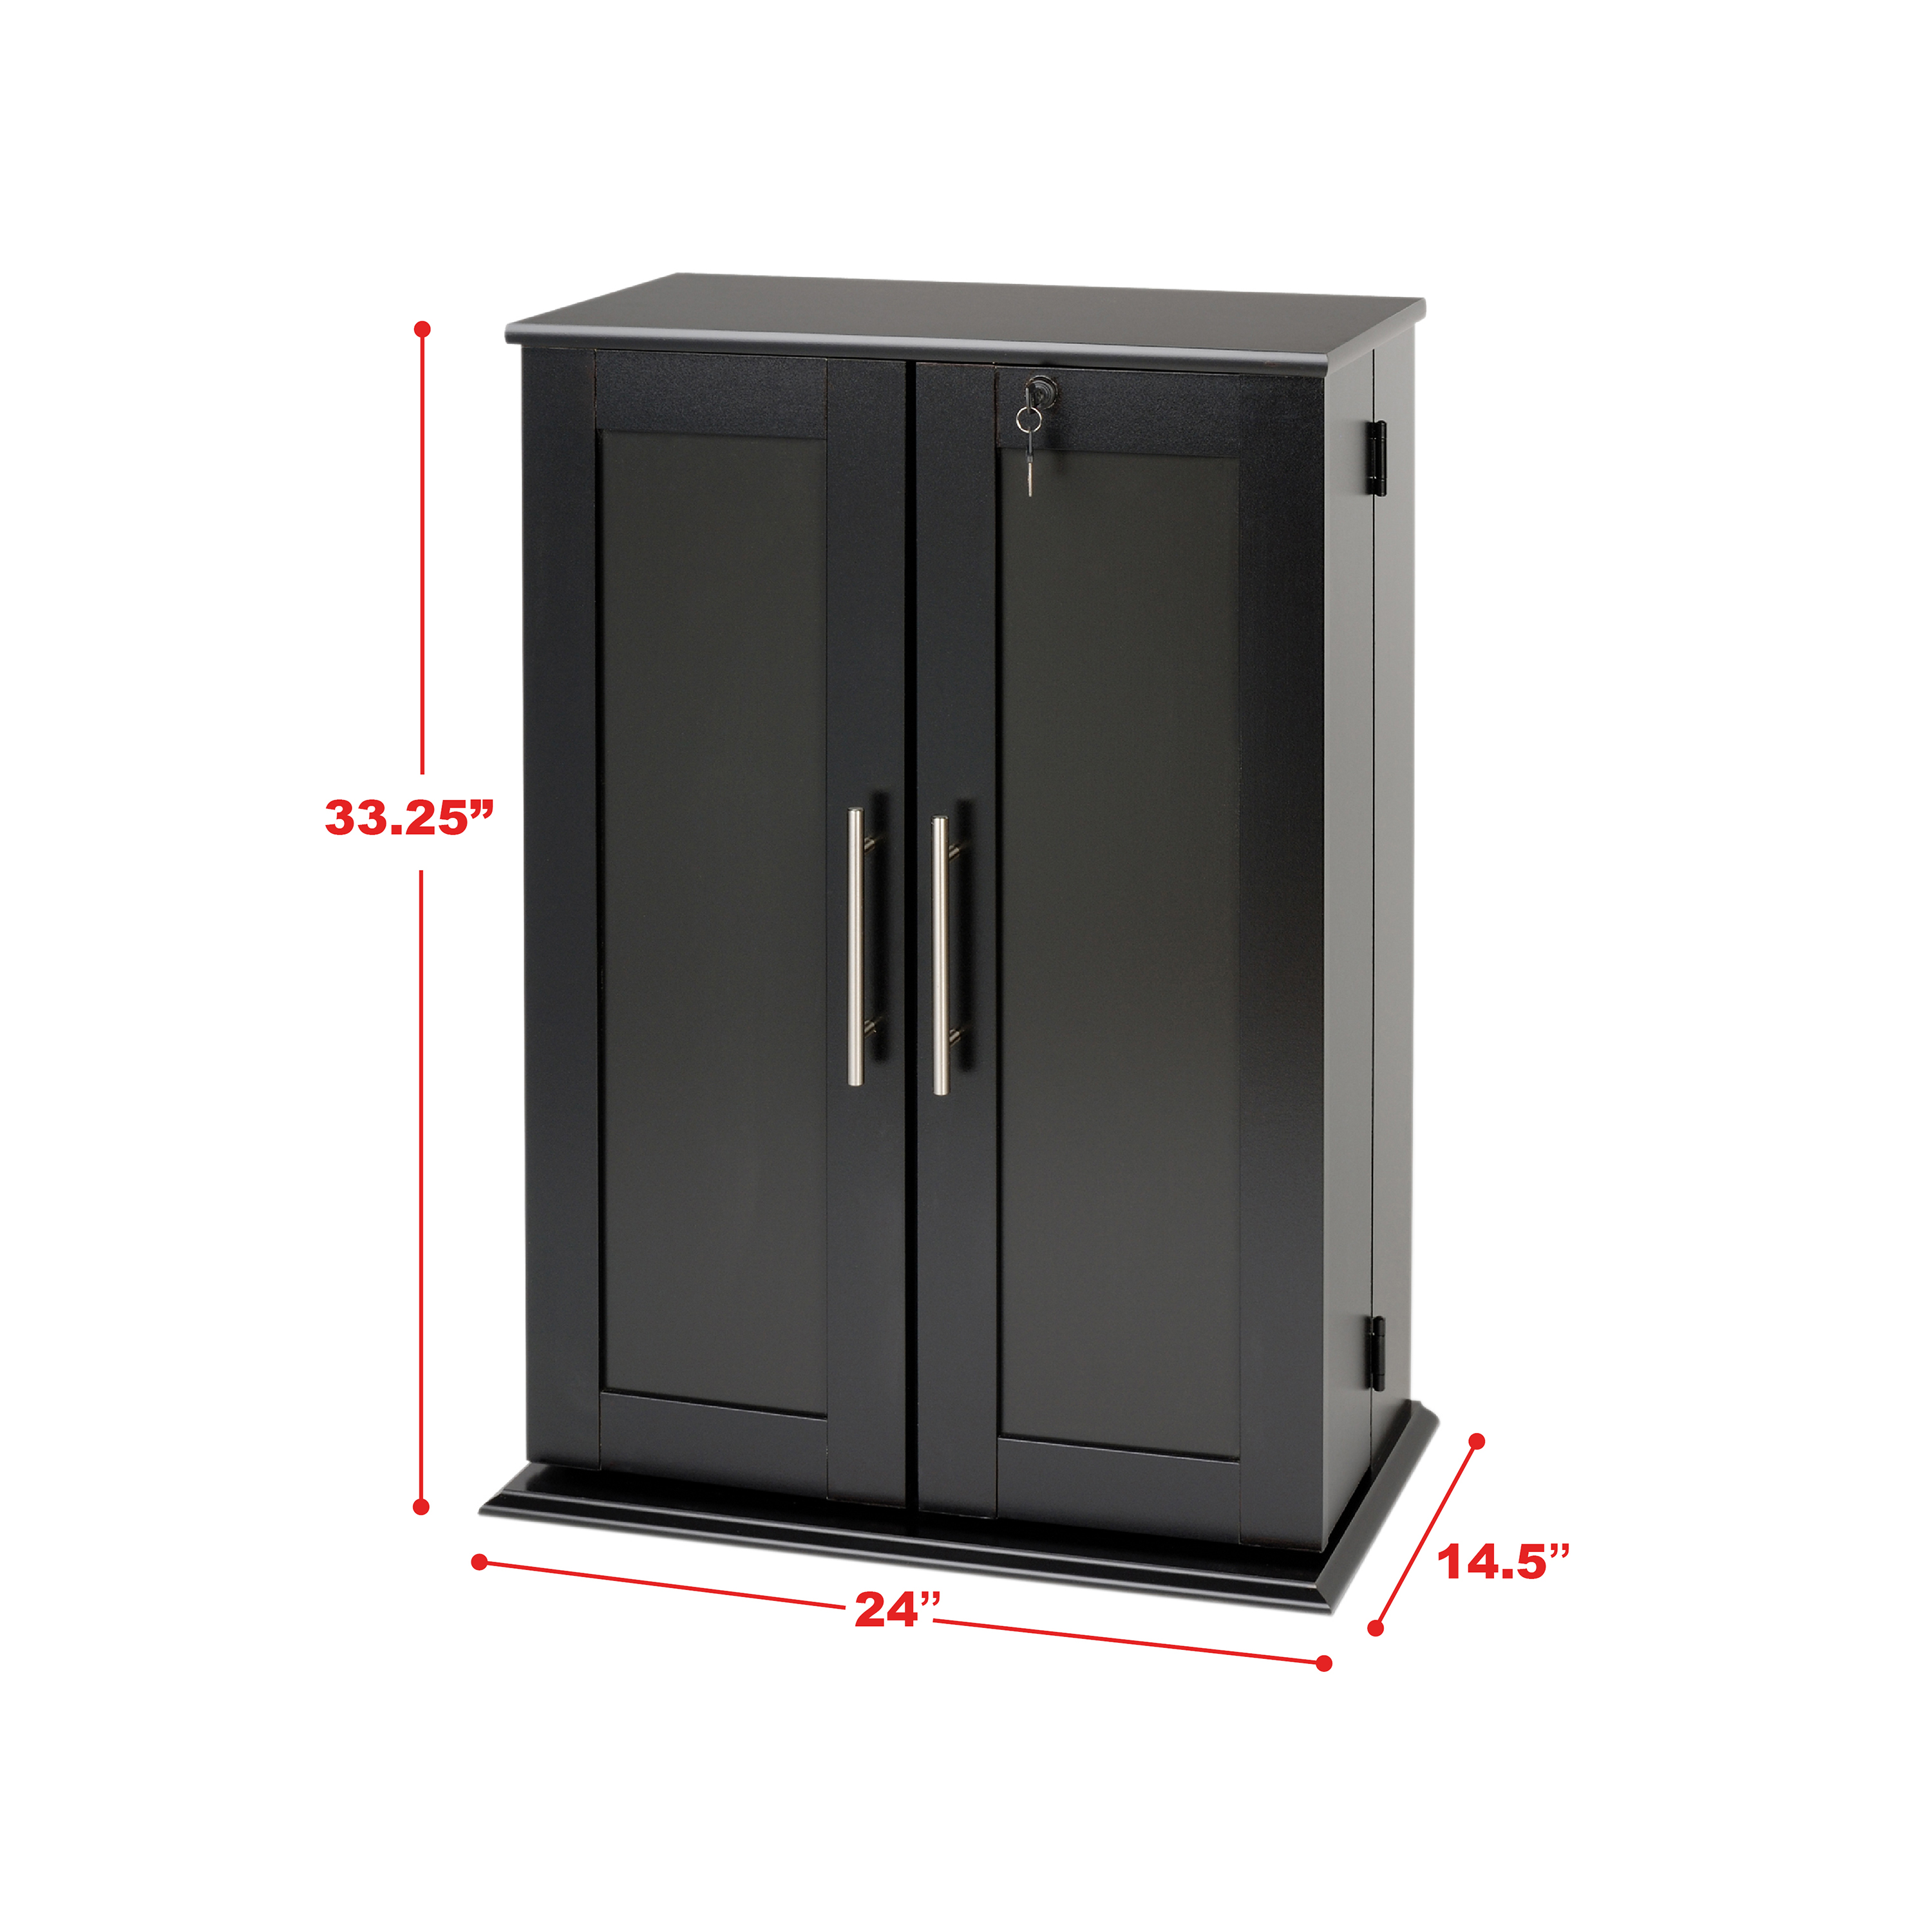 Prepac Locking Media Storage Cabinet with Shaker Doors, Black - image 4 of 6